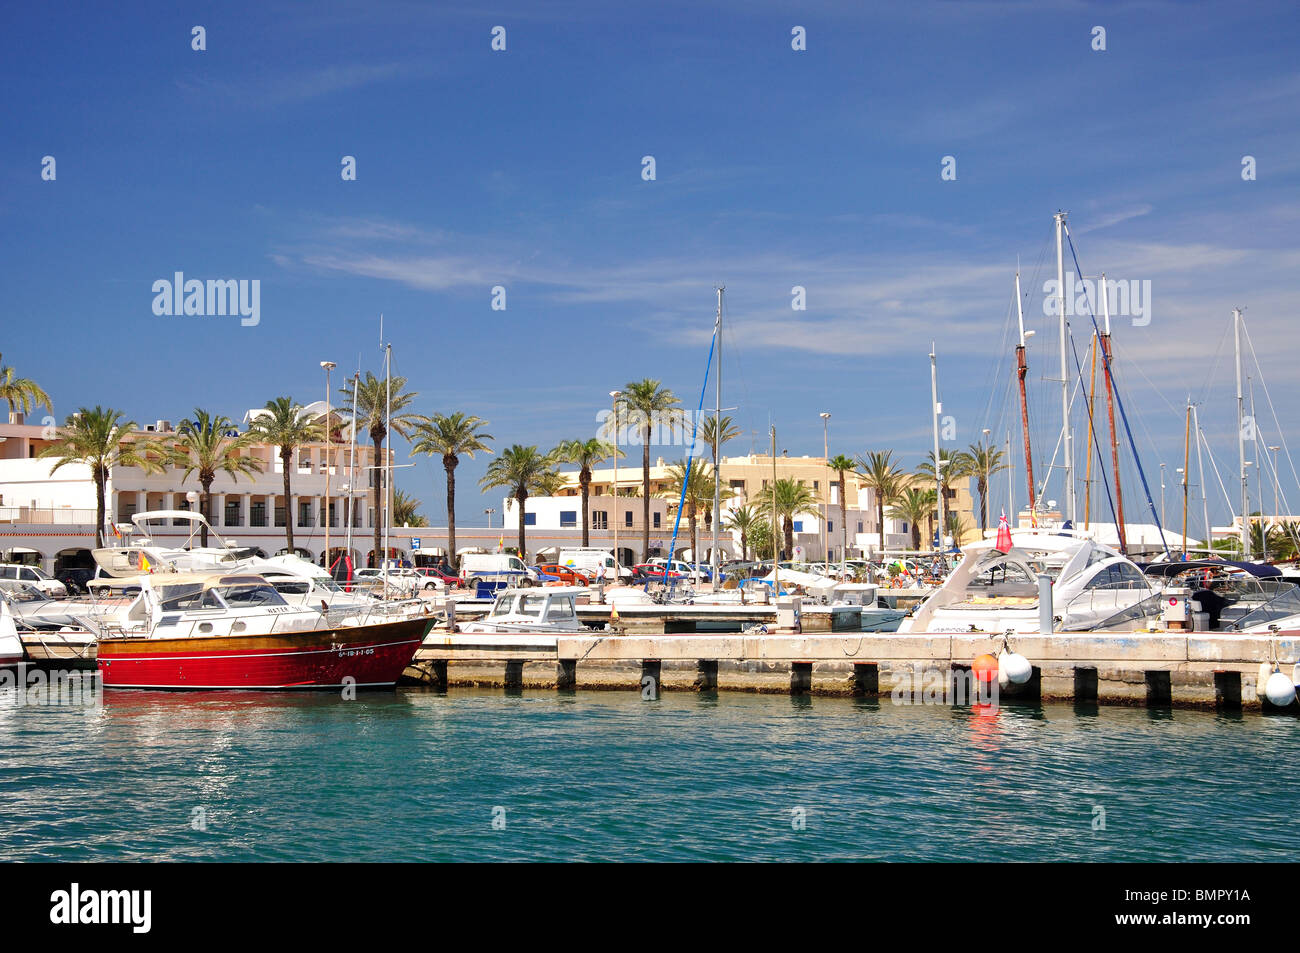 El puerto de La Savina, La Savina, Formentera, Islas Baleares, España  Fotografía de stock - Alamy